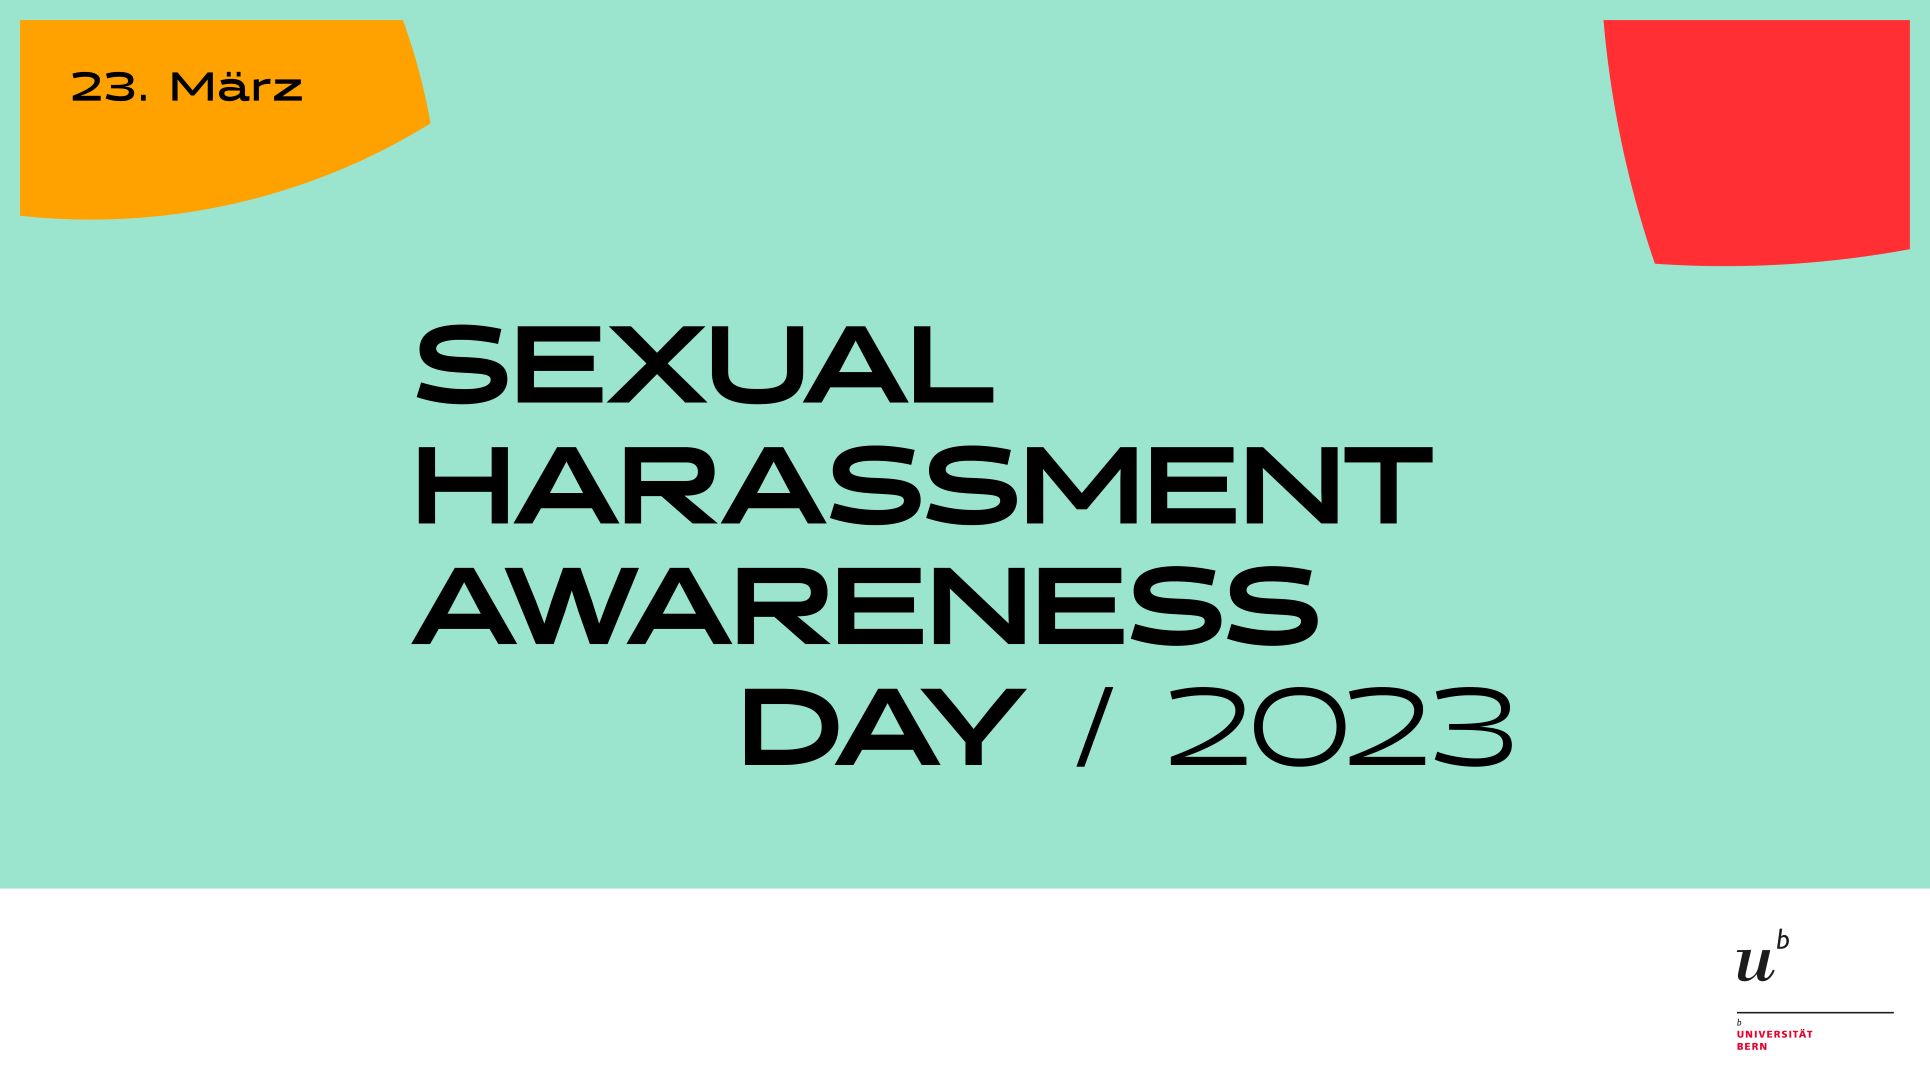 23. März 2023 - Nationaler Tag gegen sexuelle Belästigung an Hochschulen